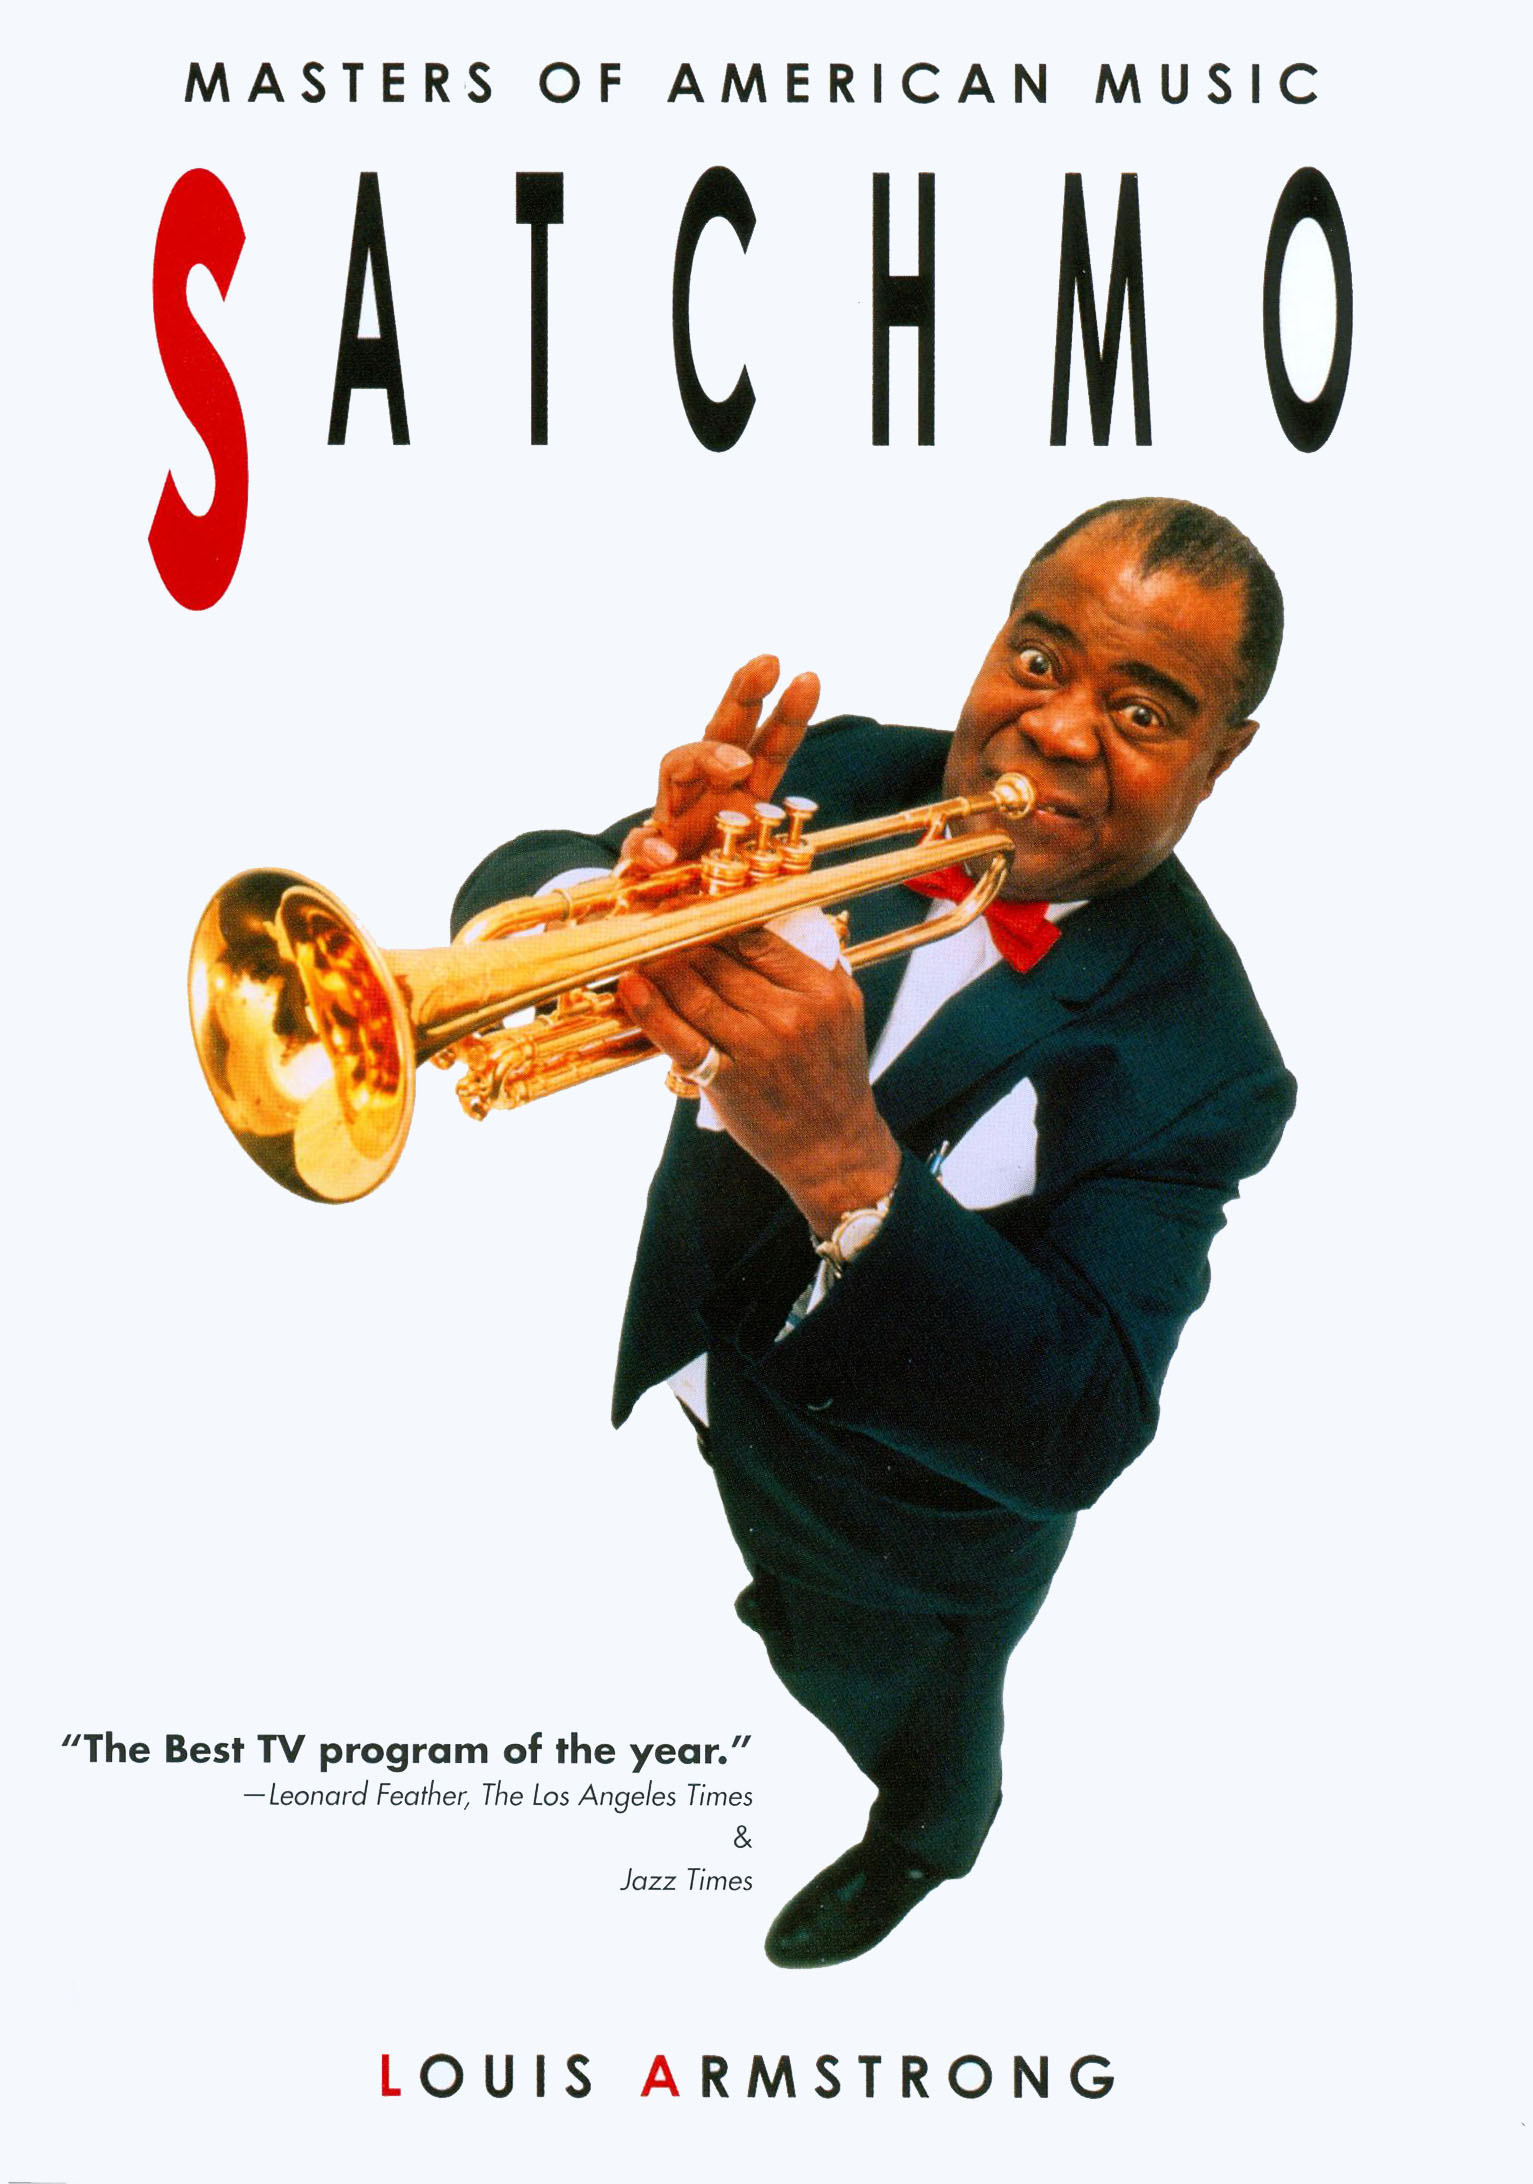 Louis Armstrong: Biography, Jazz Musician, “Satchmo”